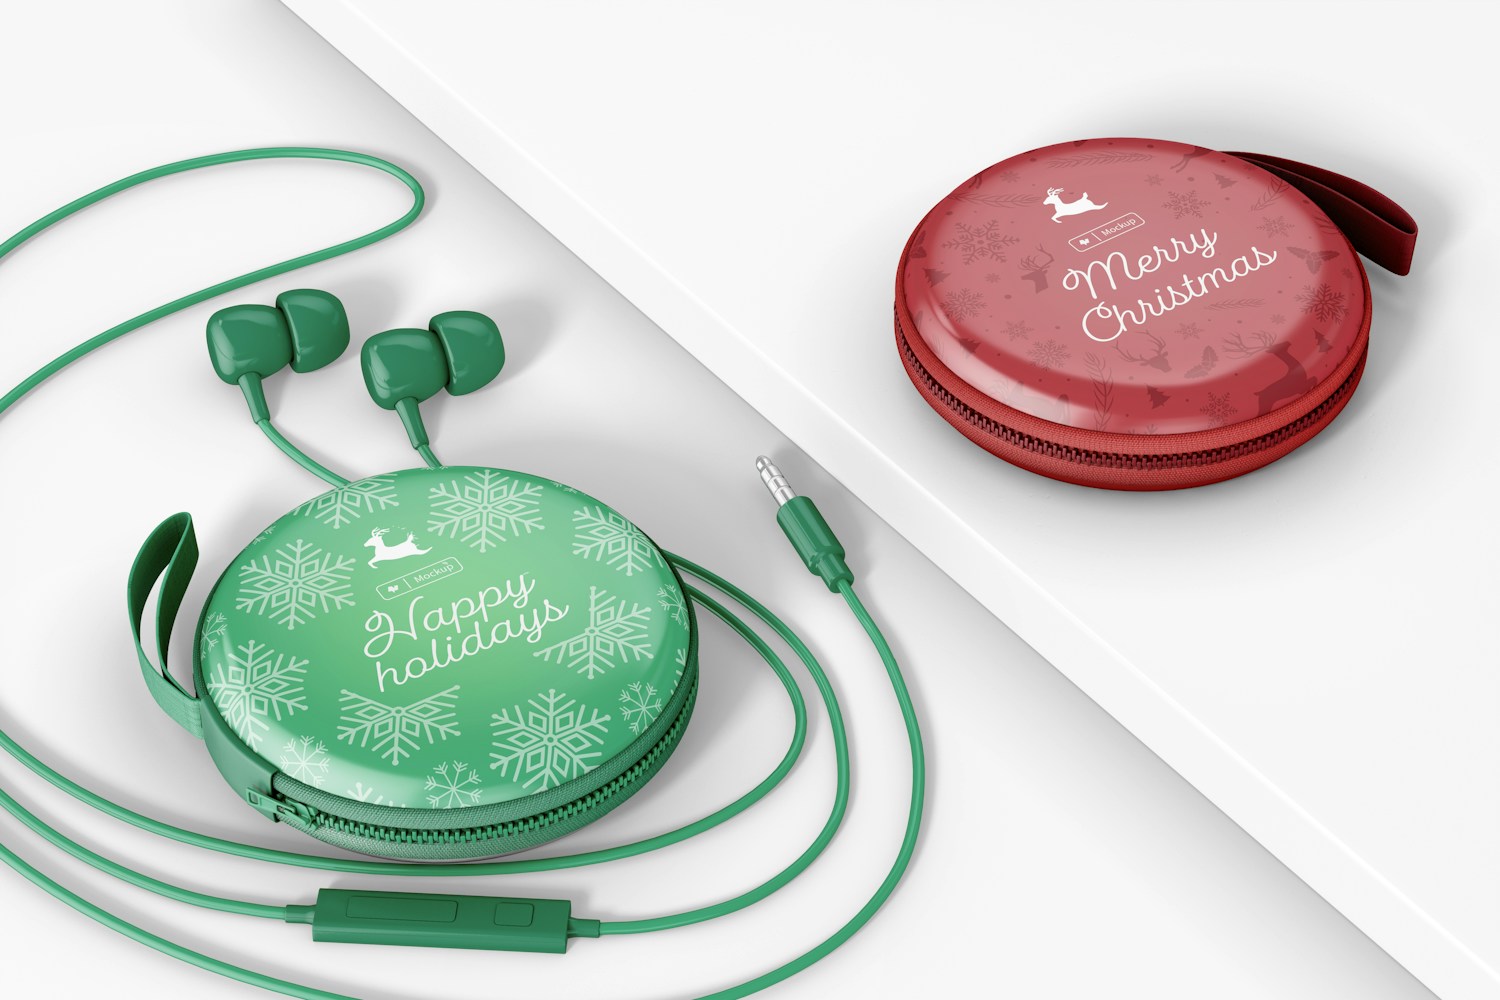 Headphones Boxes with Zipper Mockup, Perspective